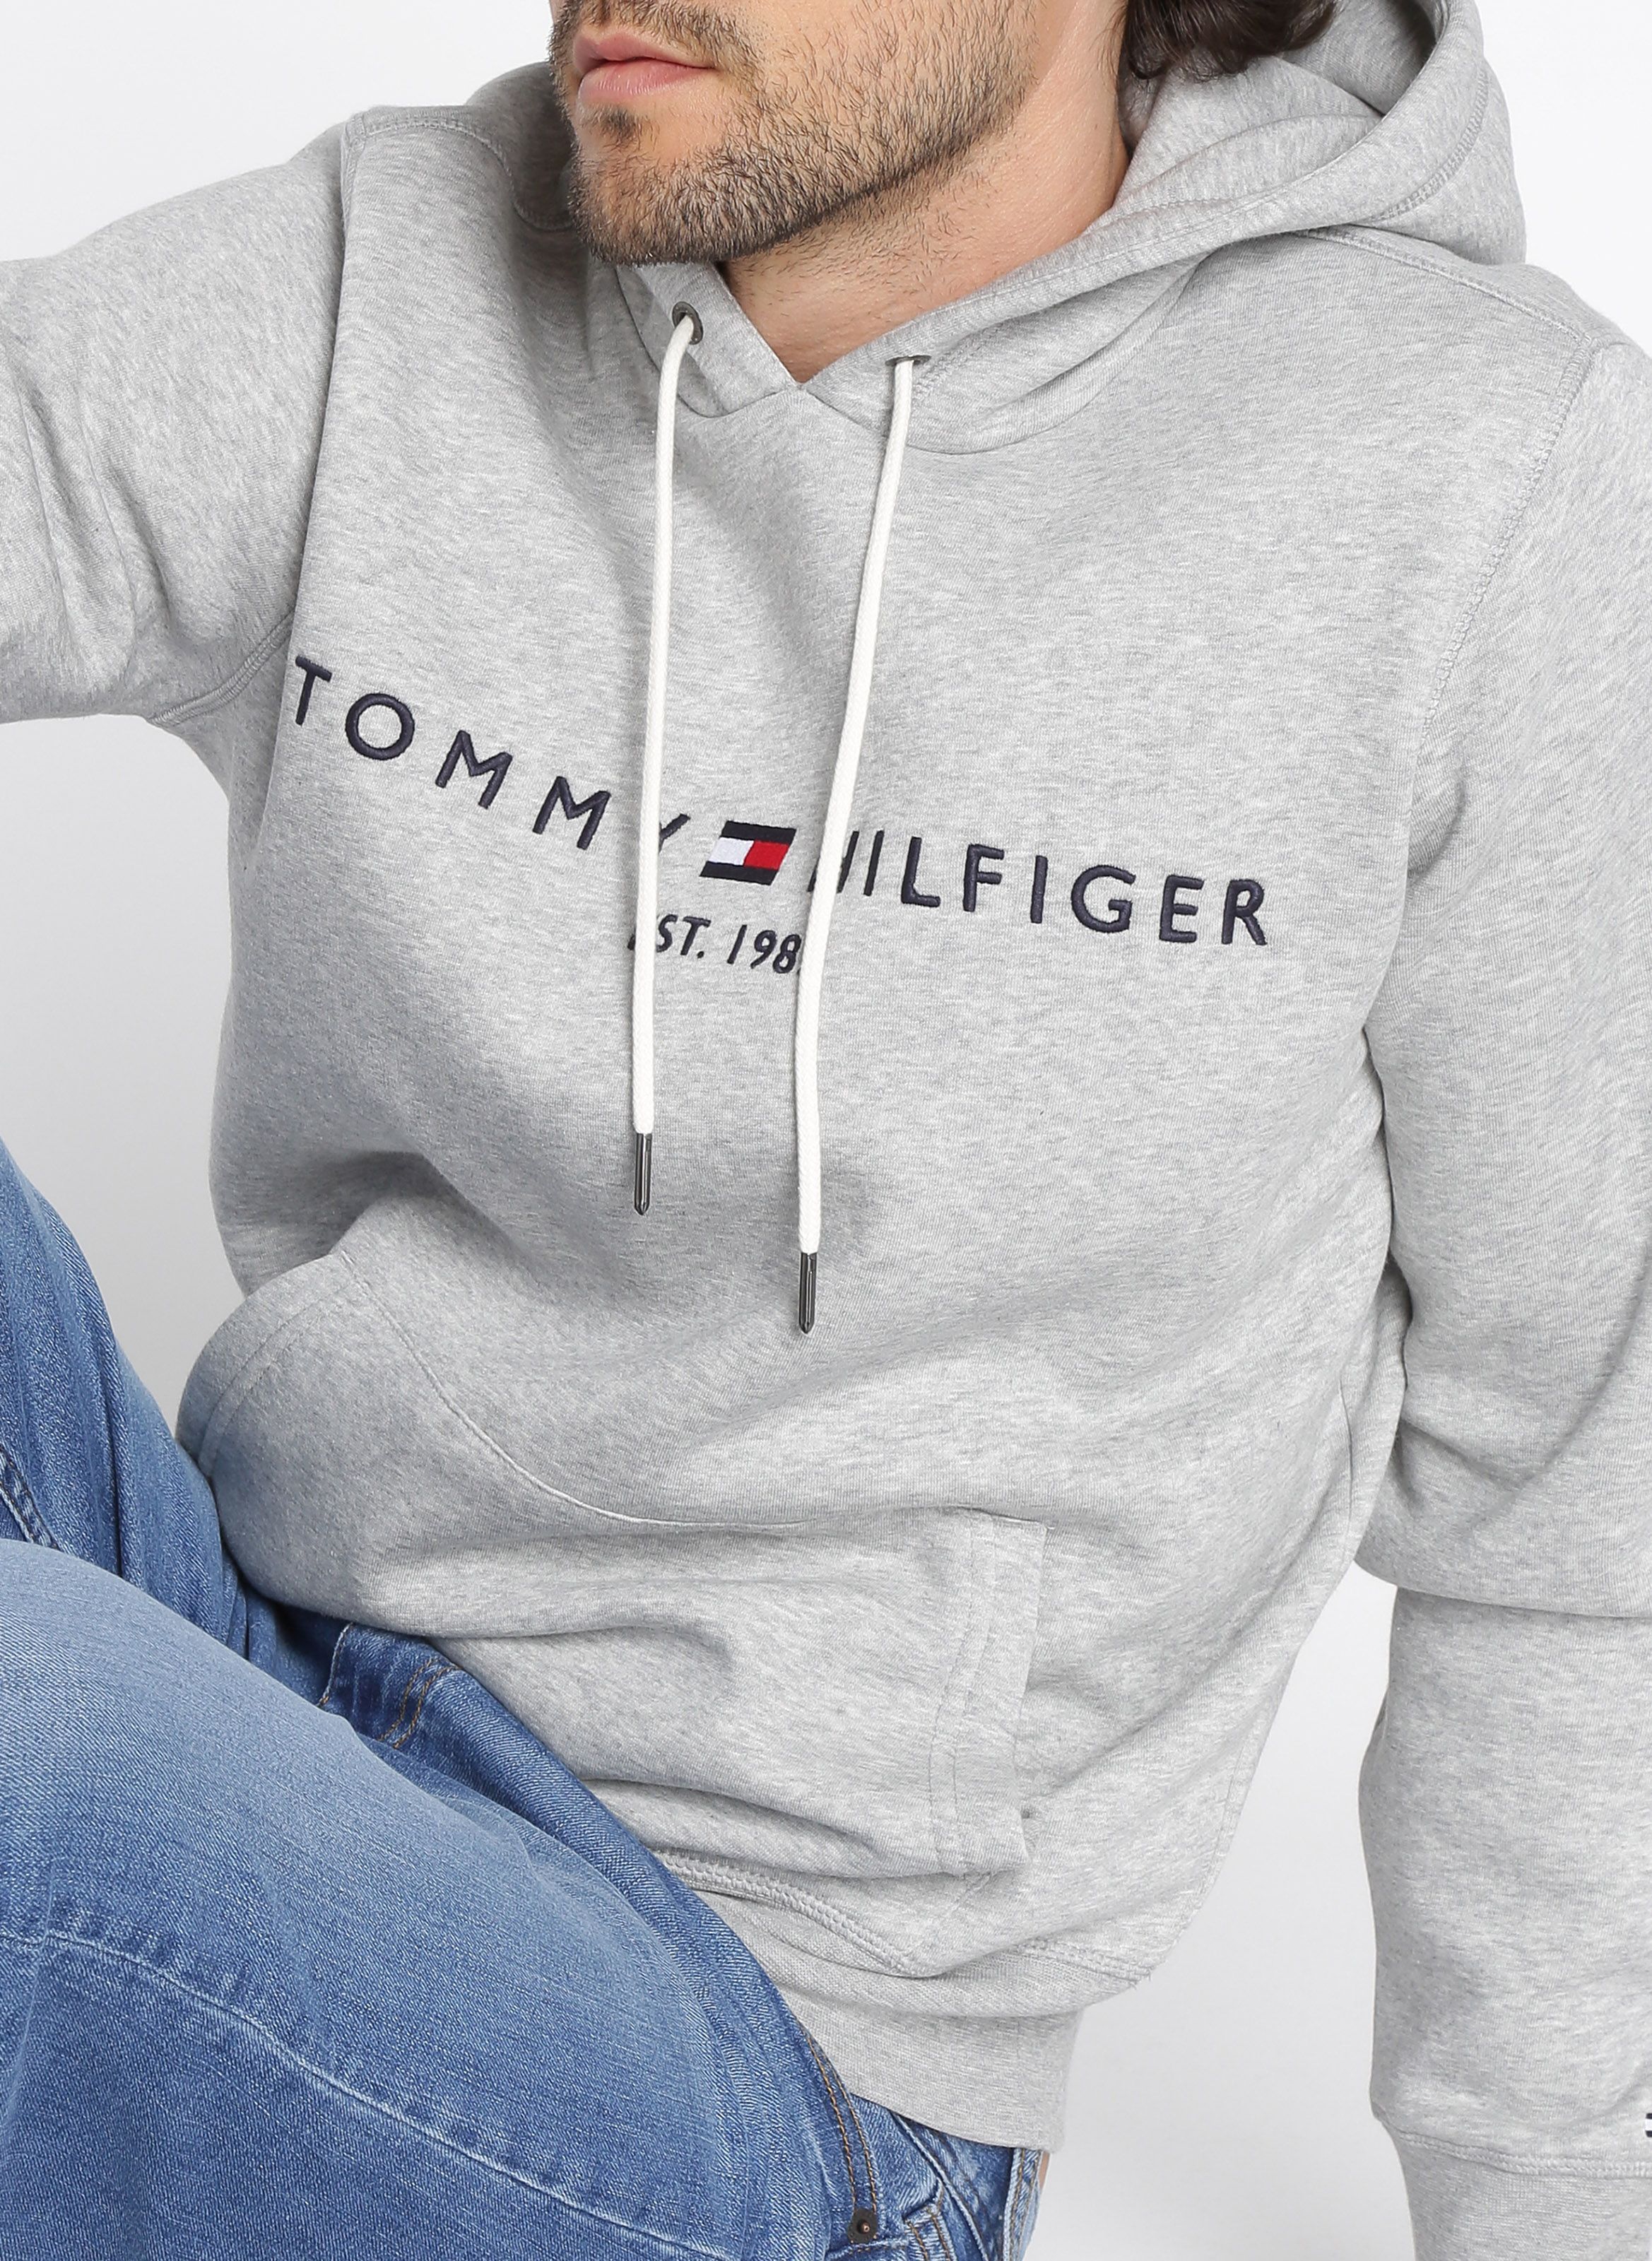 Tommy Hilfiger sweatshirt HERREN Pullovers & Sweatshirts Print Grau M Rabatt 73 % 